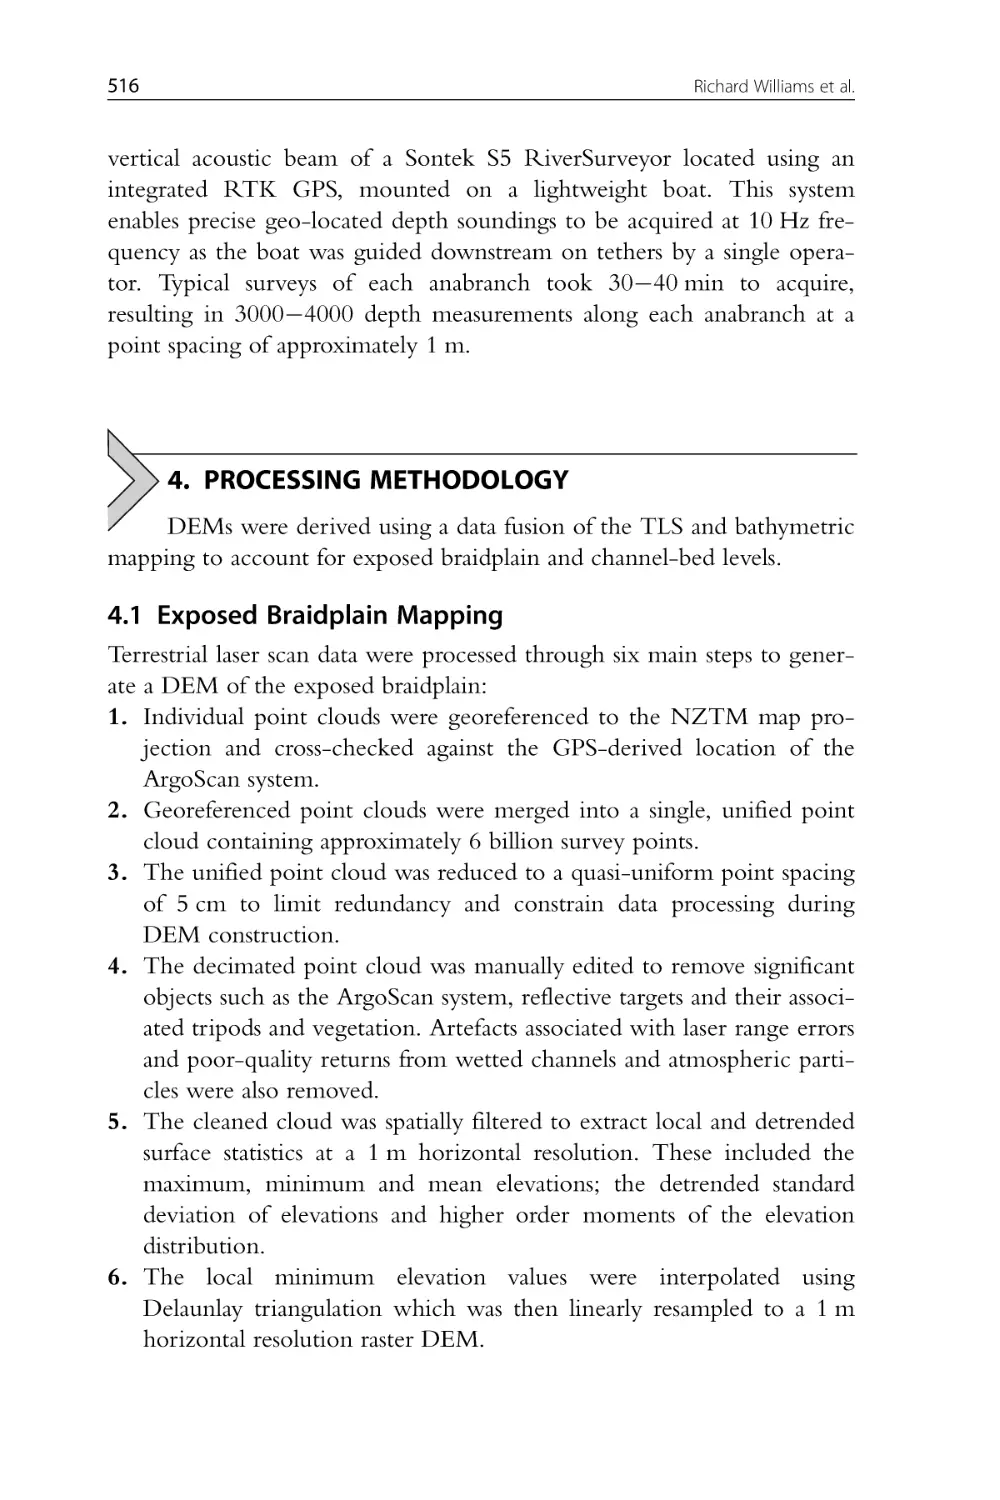 4. Processing Methodology
4.1 Exposed Braidplain Mapping